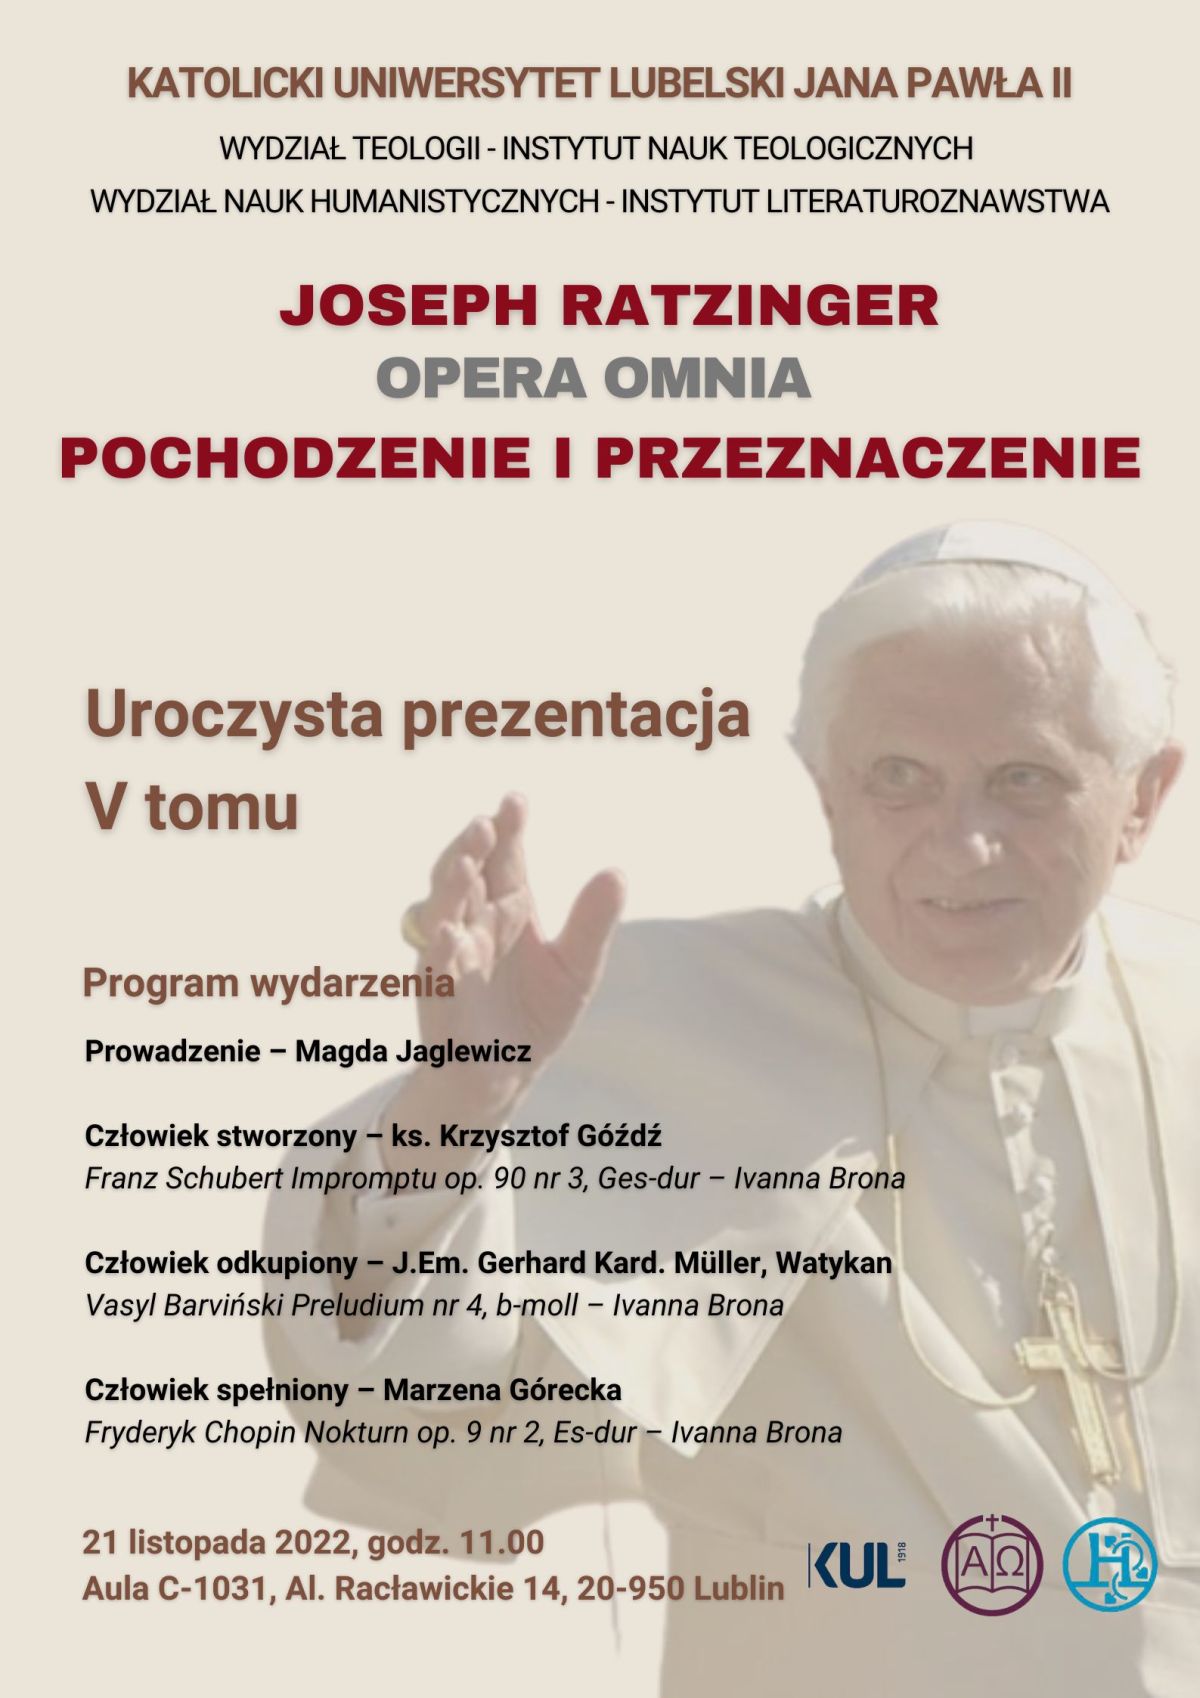 Prezentacja 5. tomu Opera omnia Josepha Ratzingera